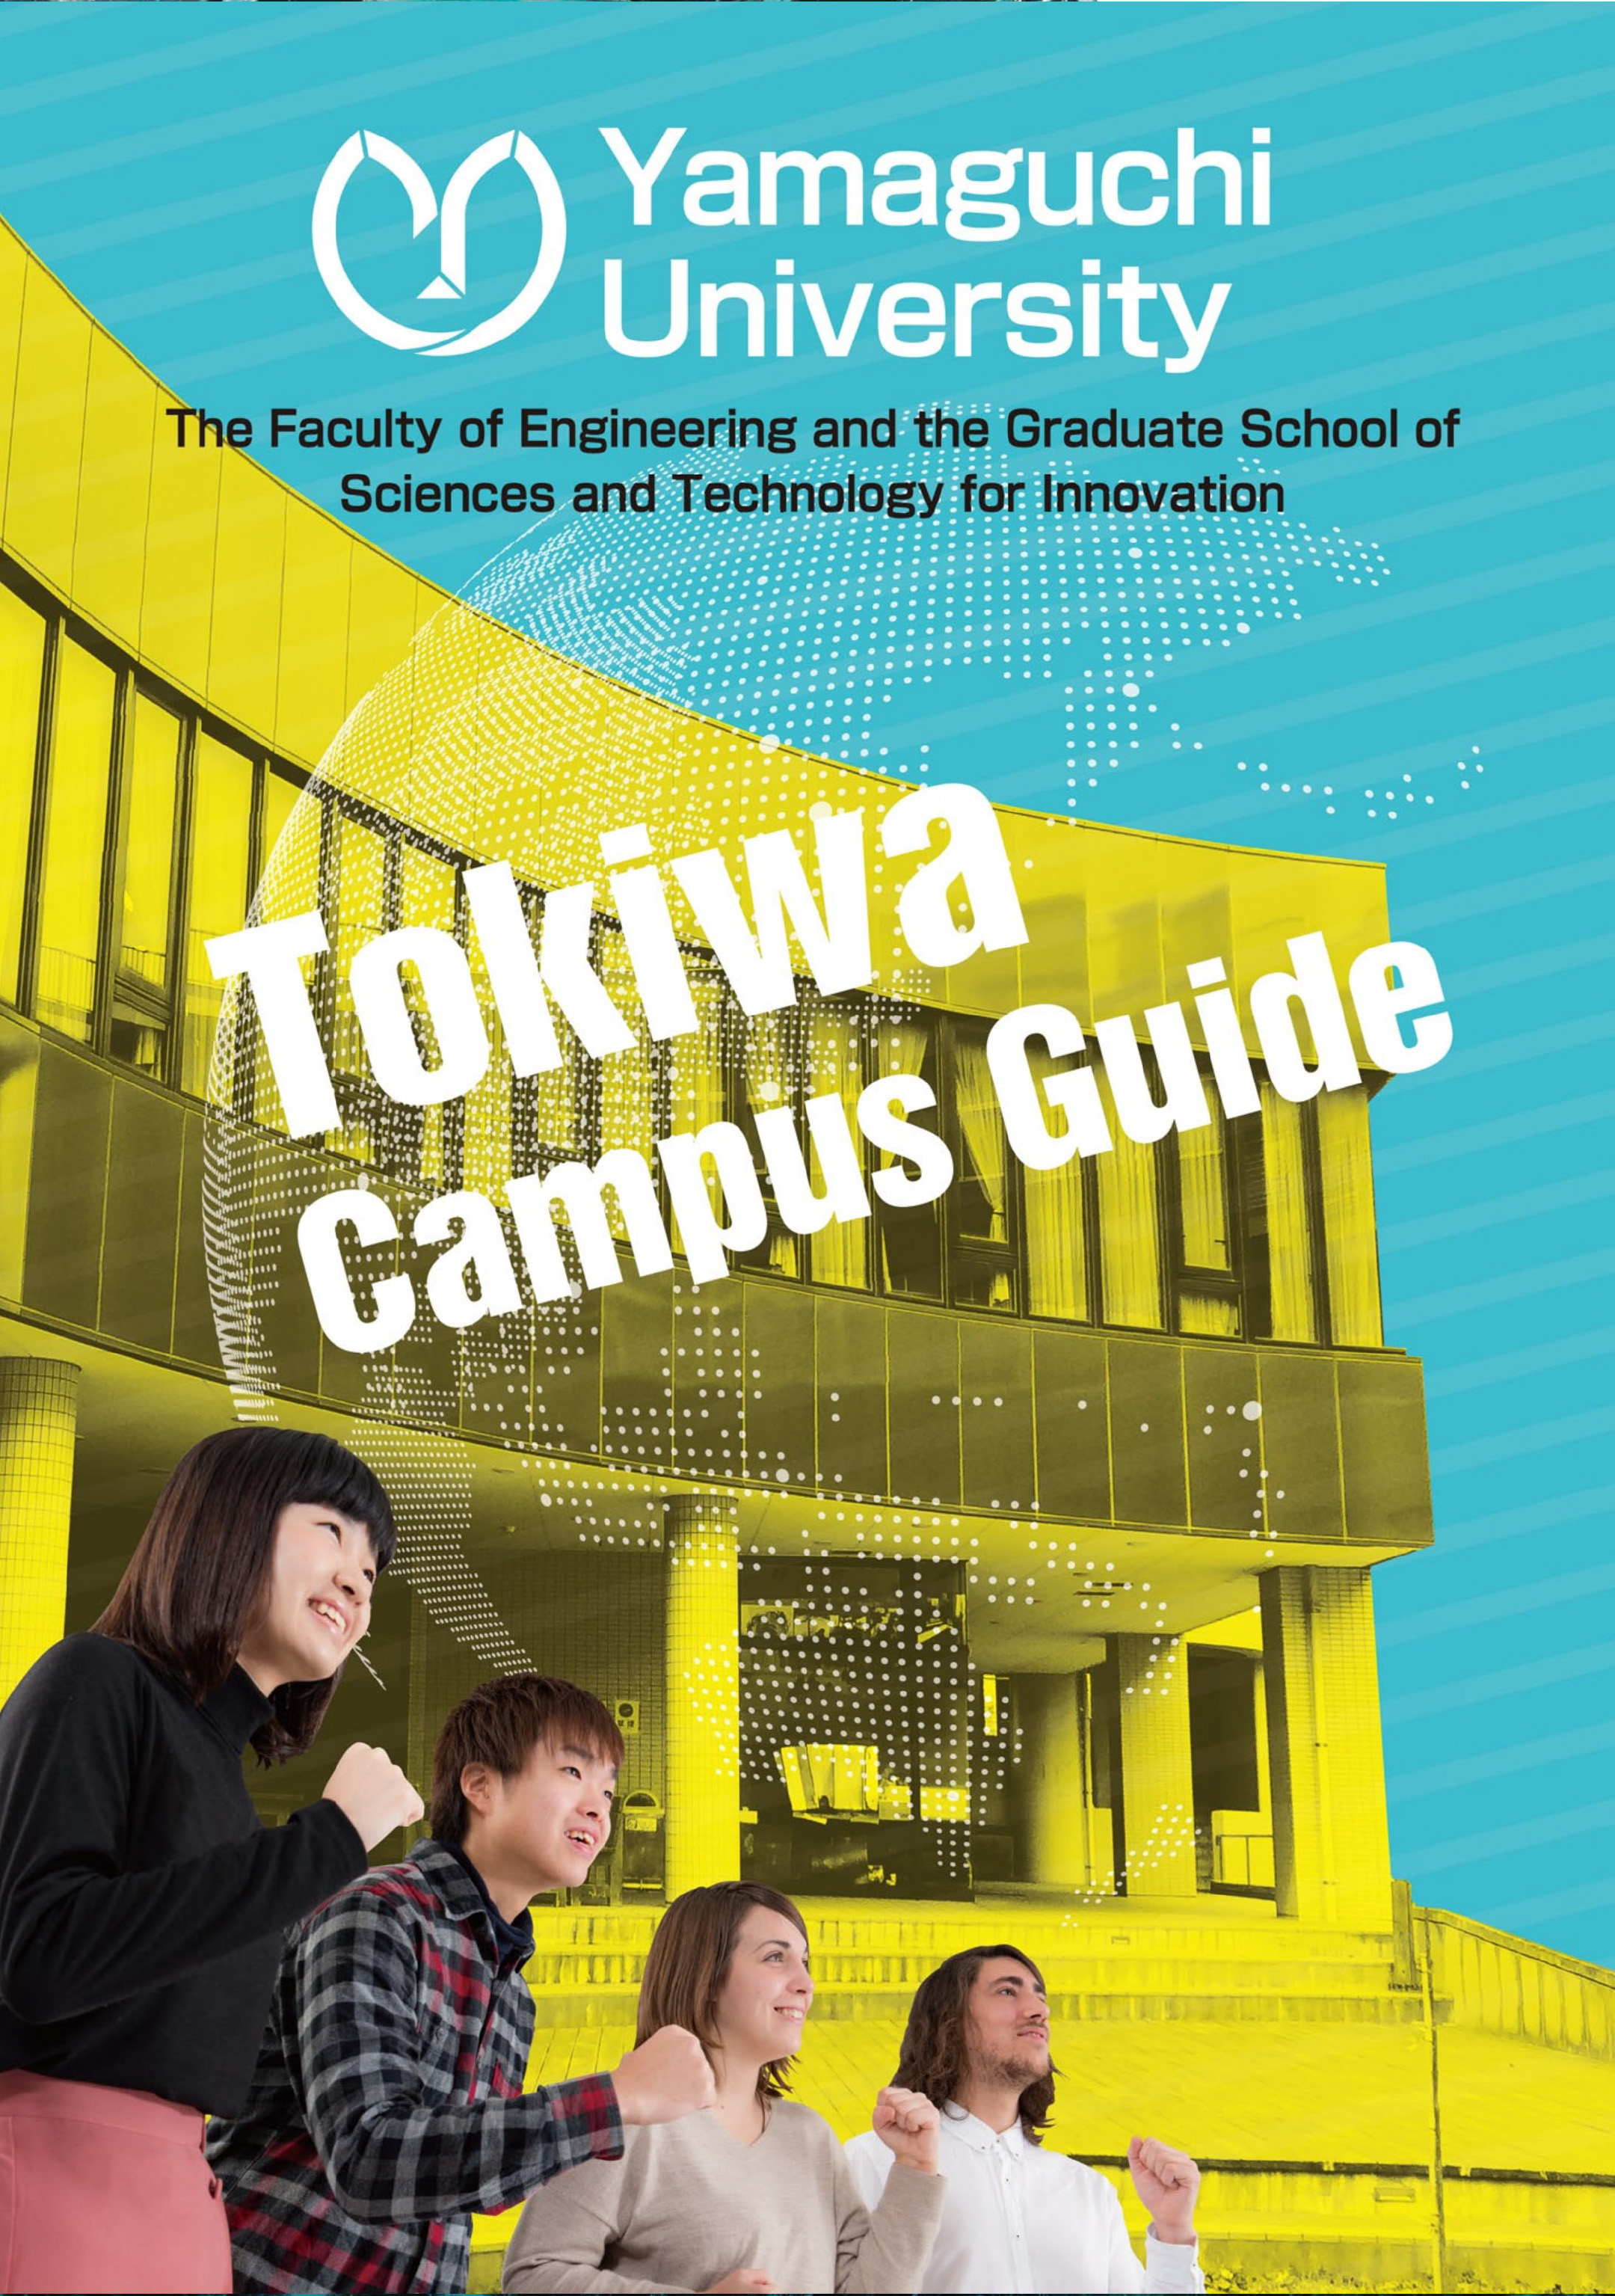 Tokiwa Campus Guide